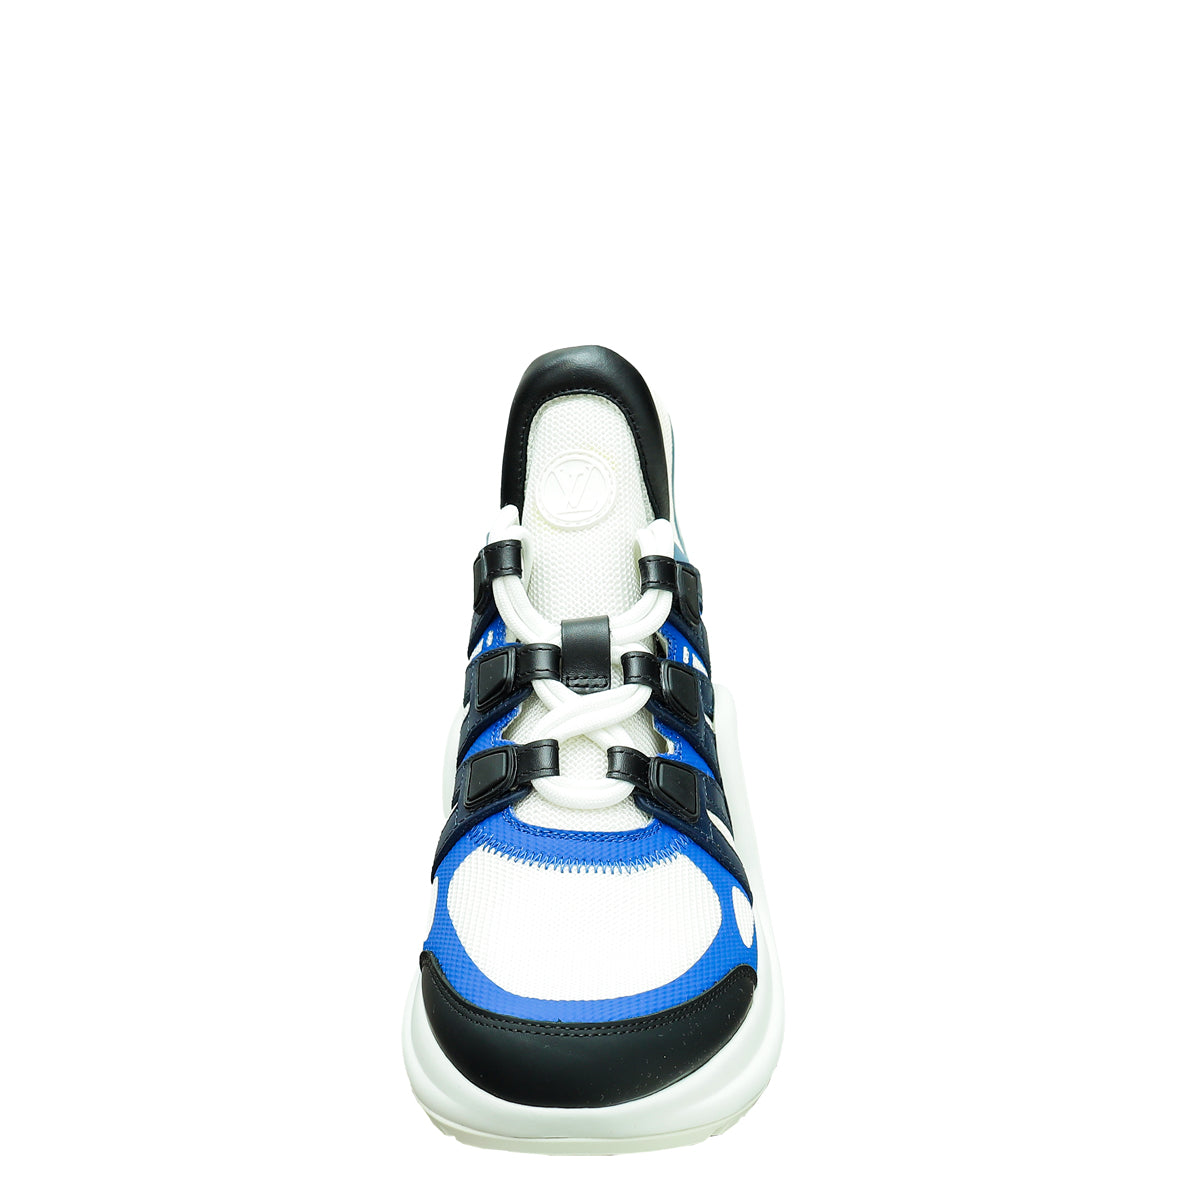 Louis Vuitton Tricolor Archlight Sneakers 35.5